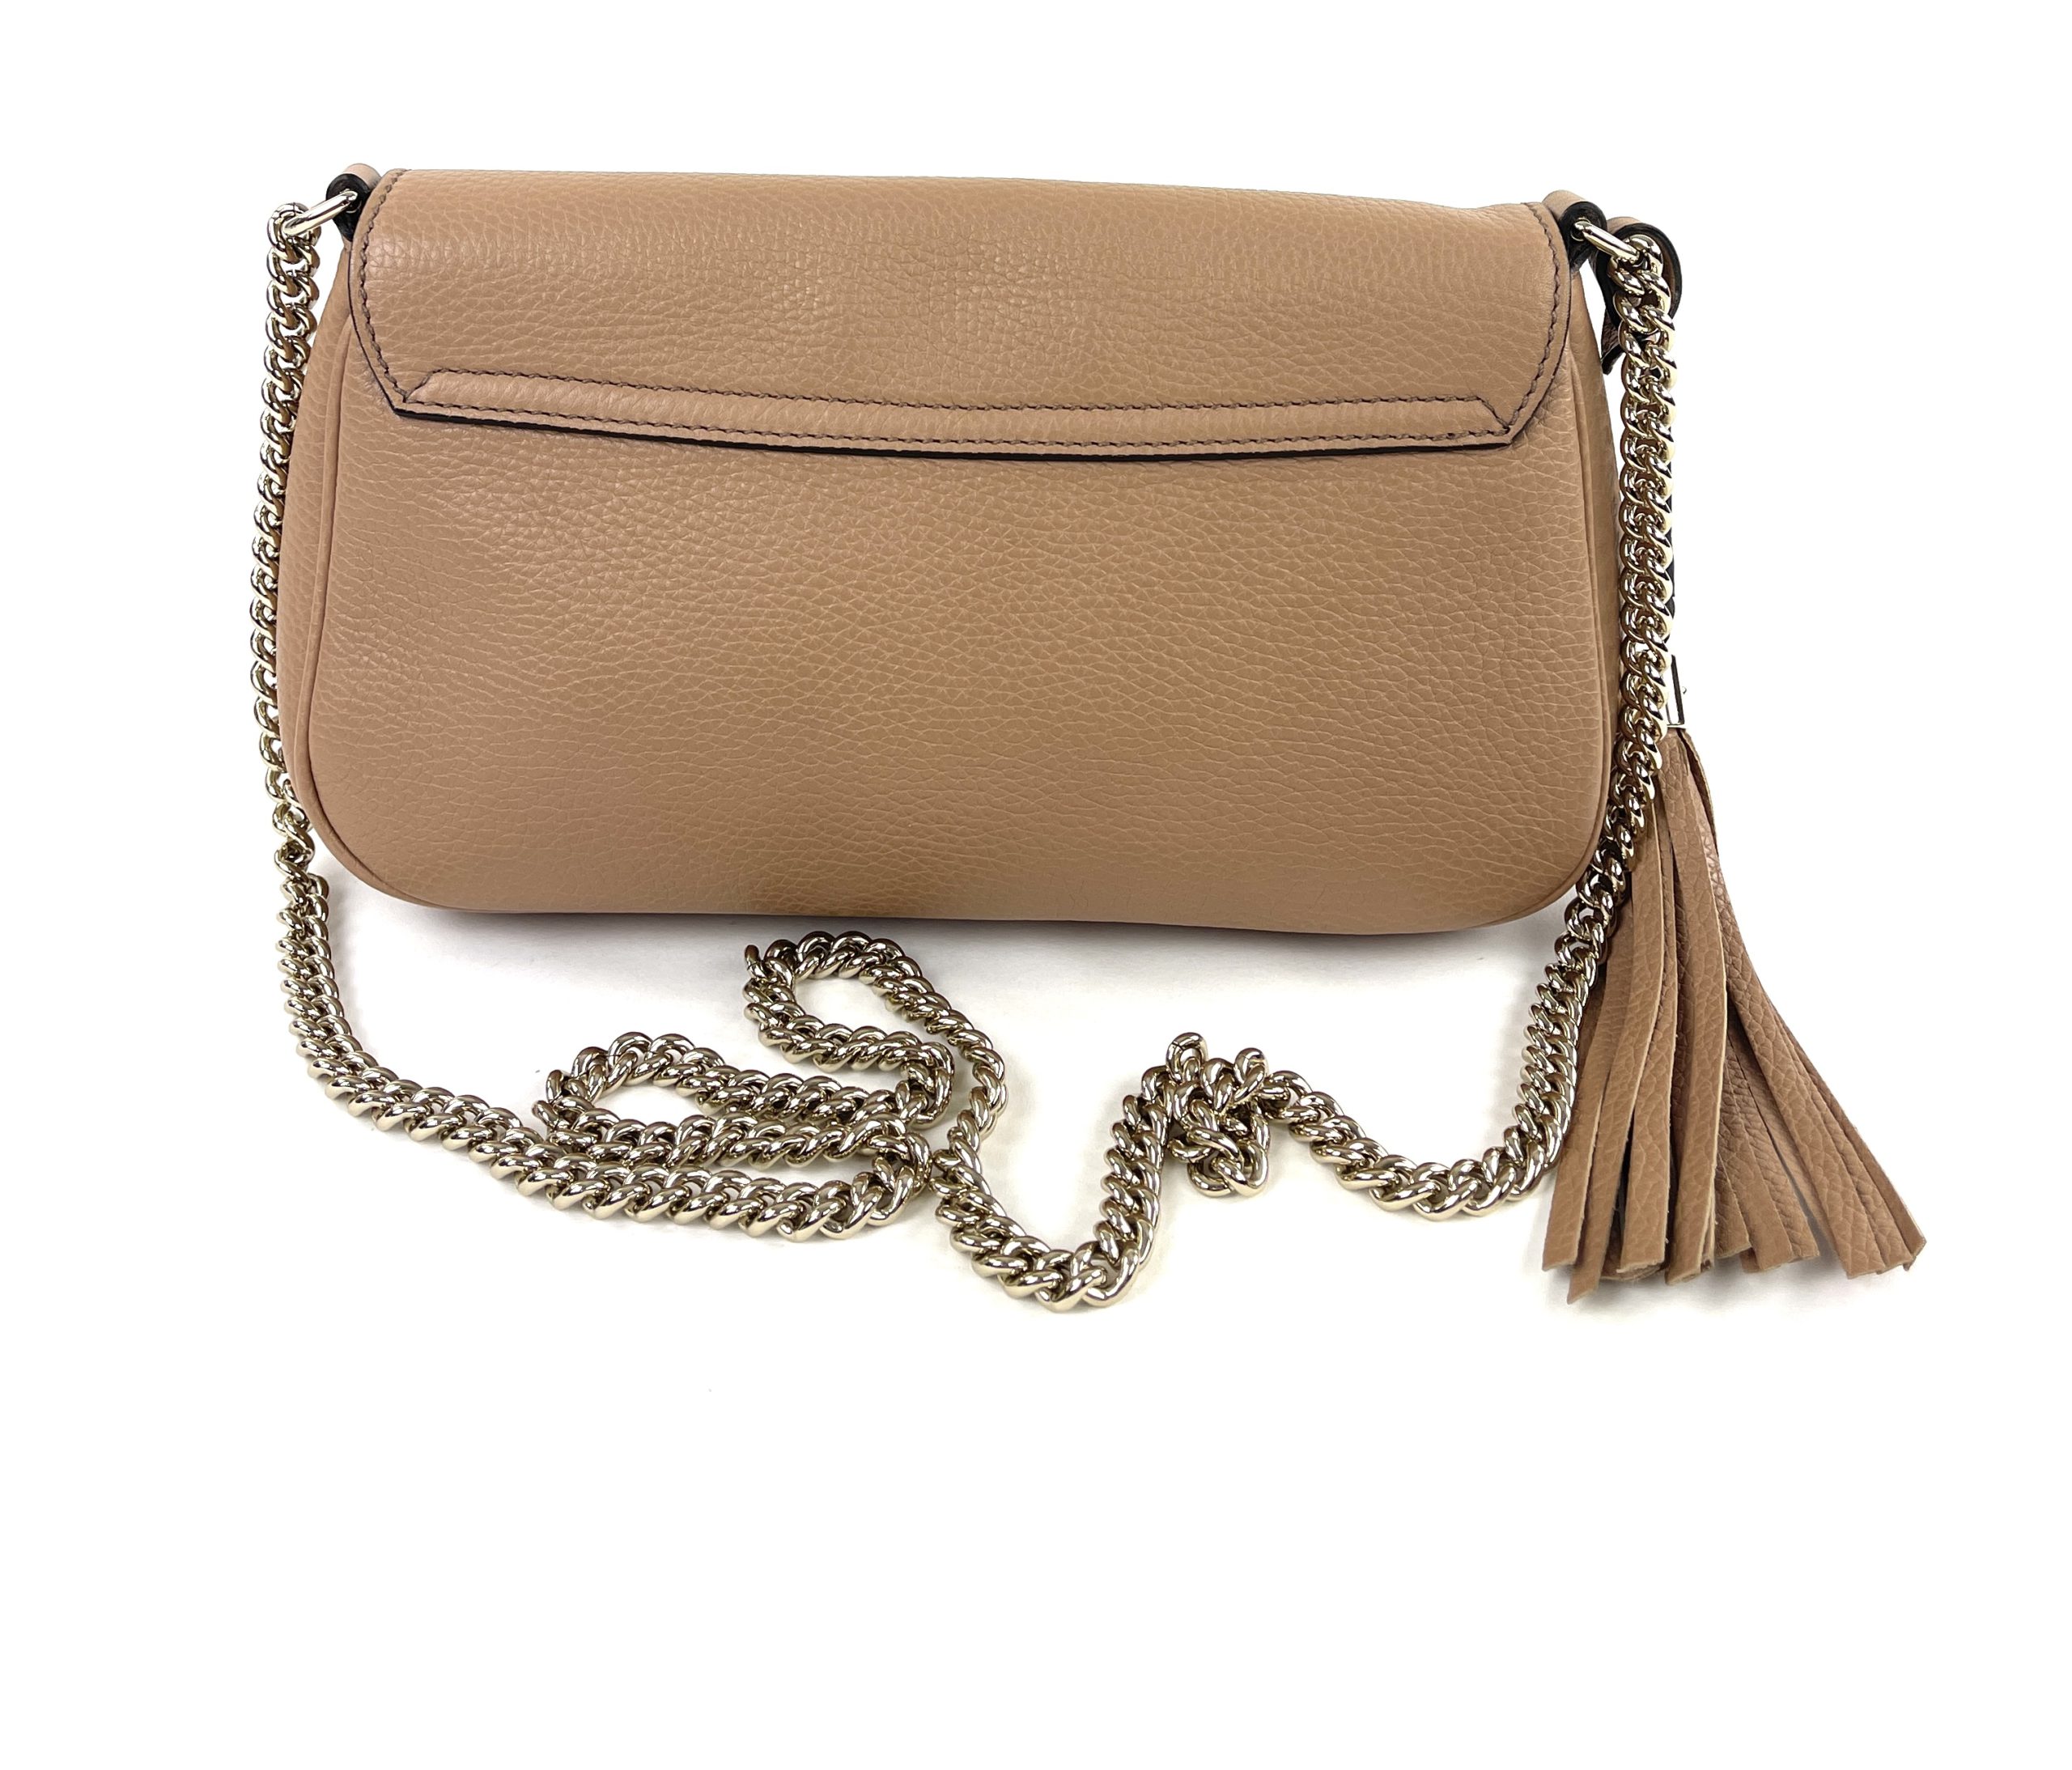 Gucci Soho Off White Leather Handbag Crossbody Clutch Ivory Italy Bag GG New